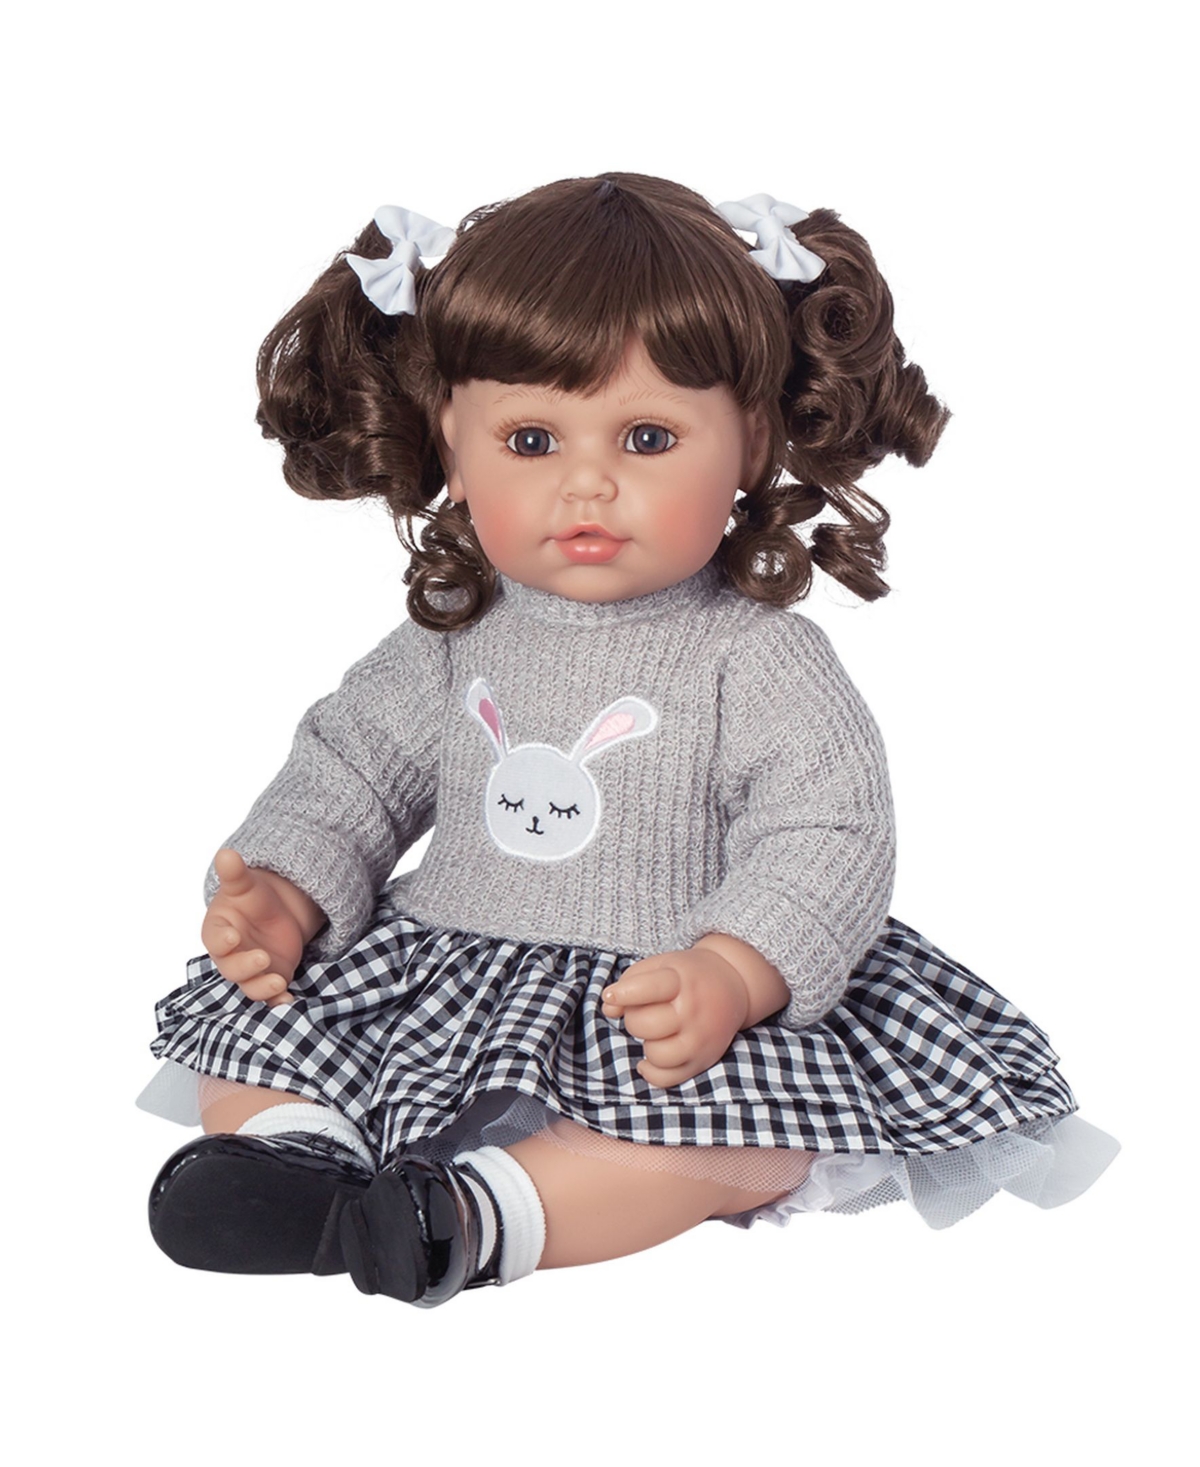 Adora Babies' Preppy Toddler Doll In Multi